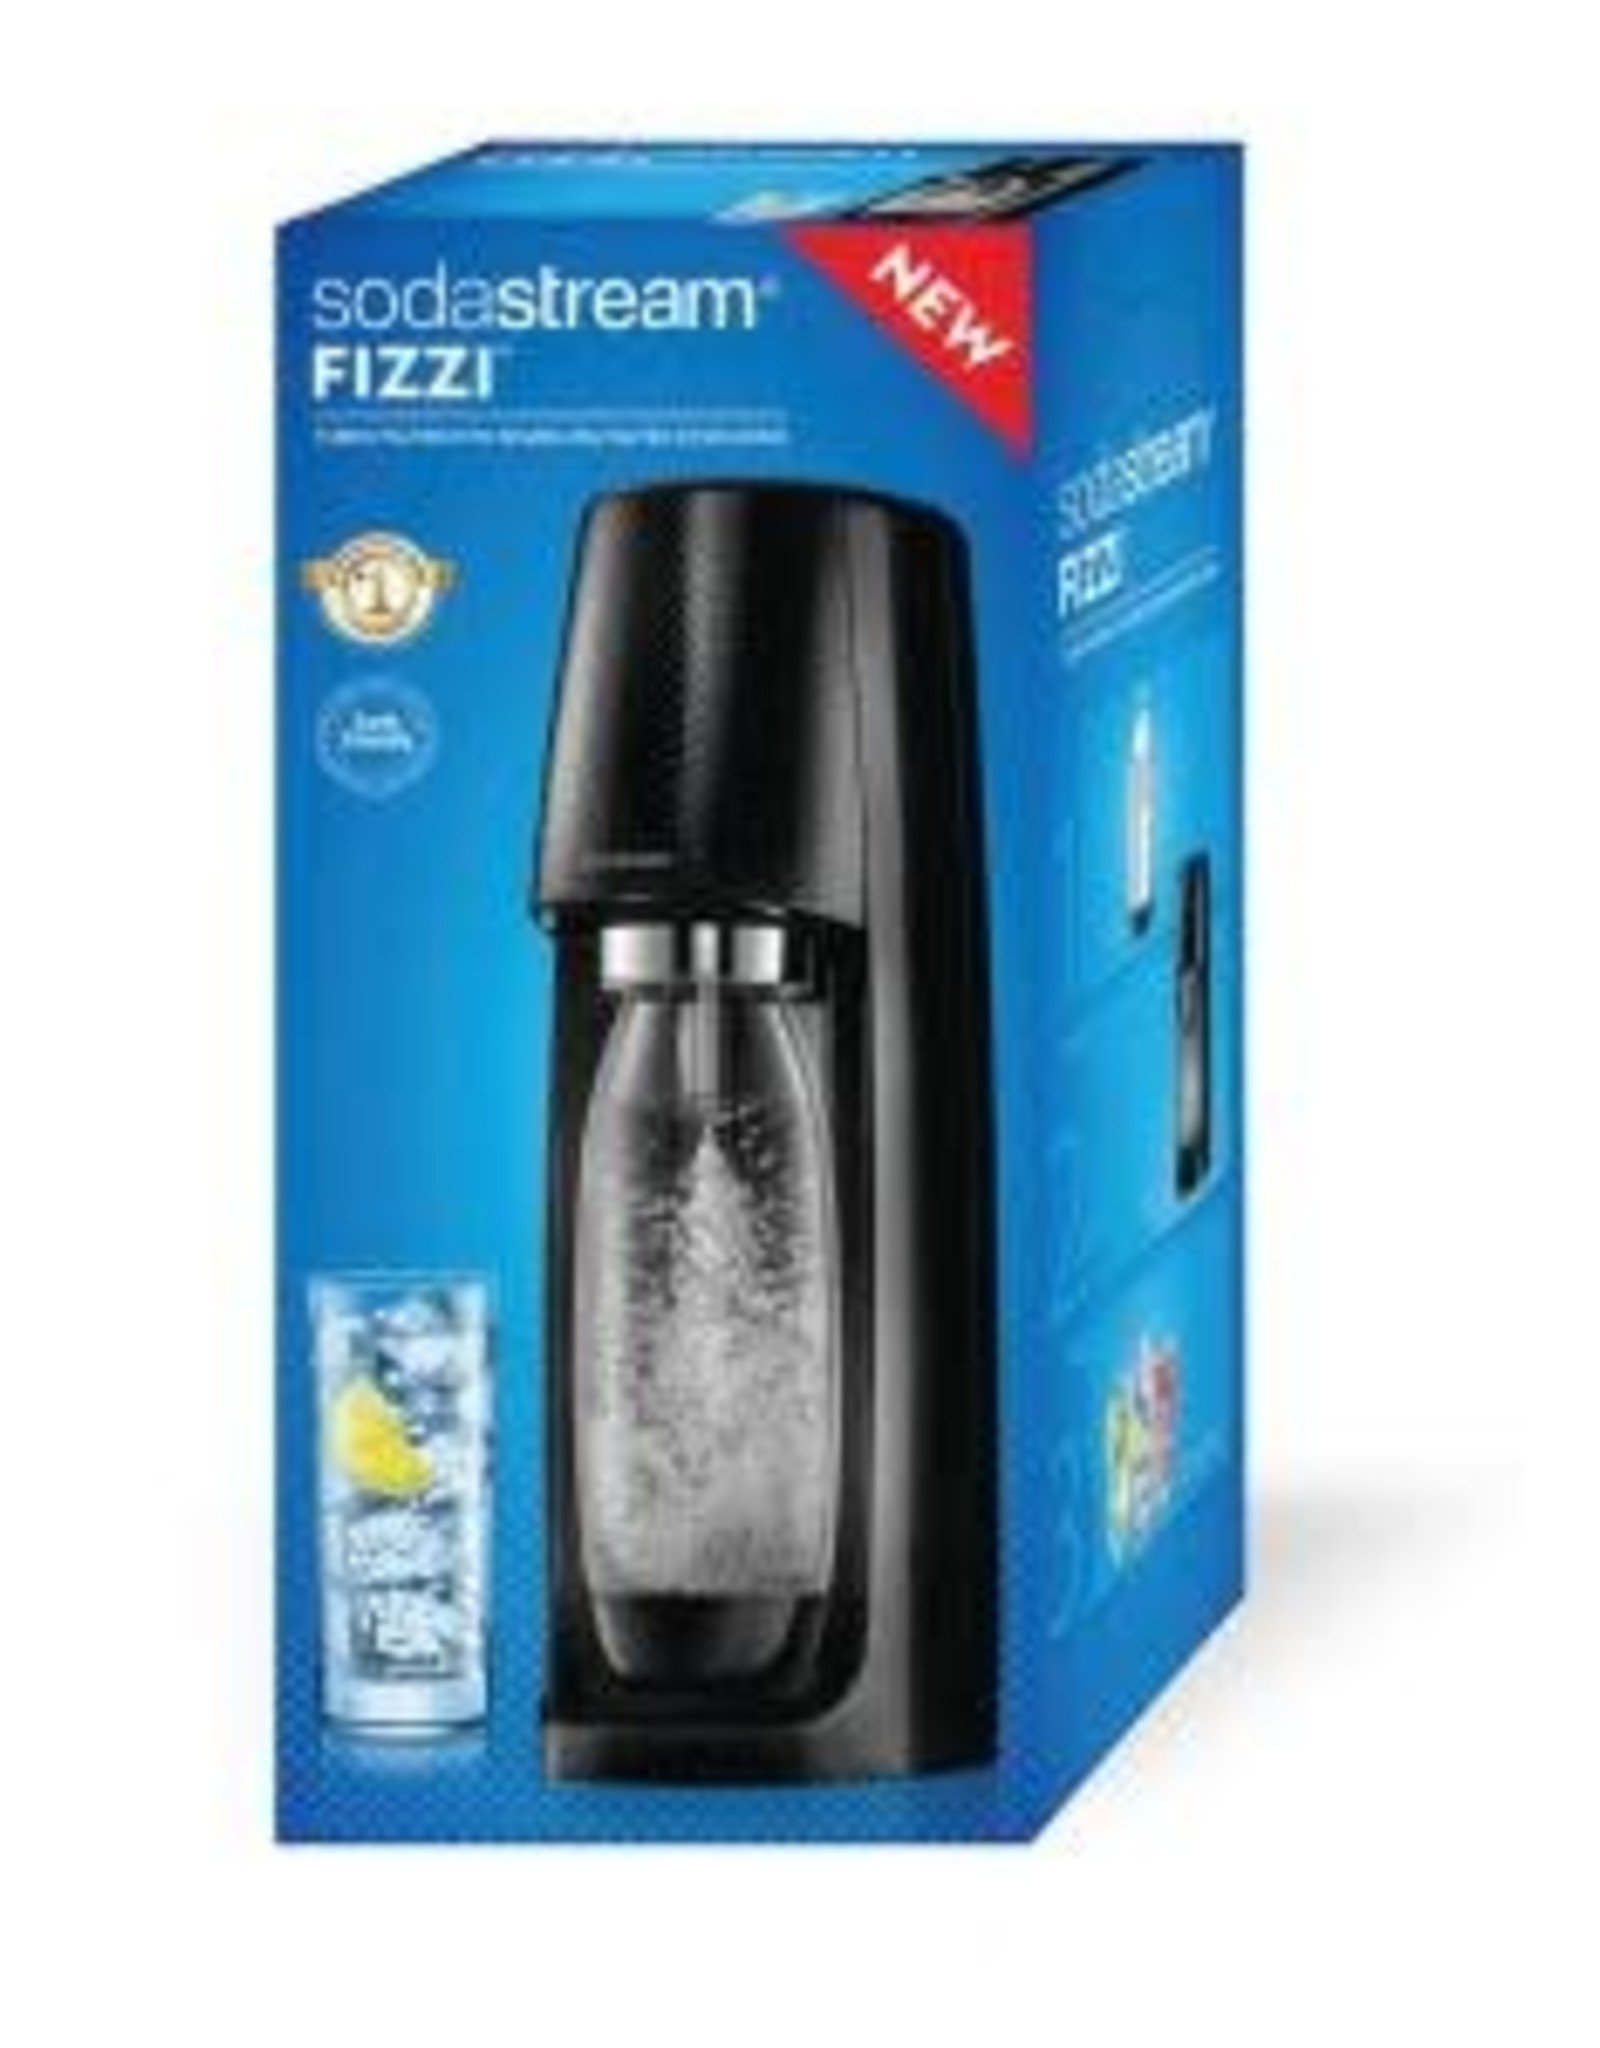 Sodastream Fizzi